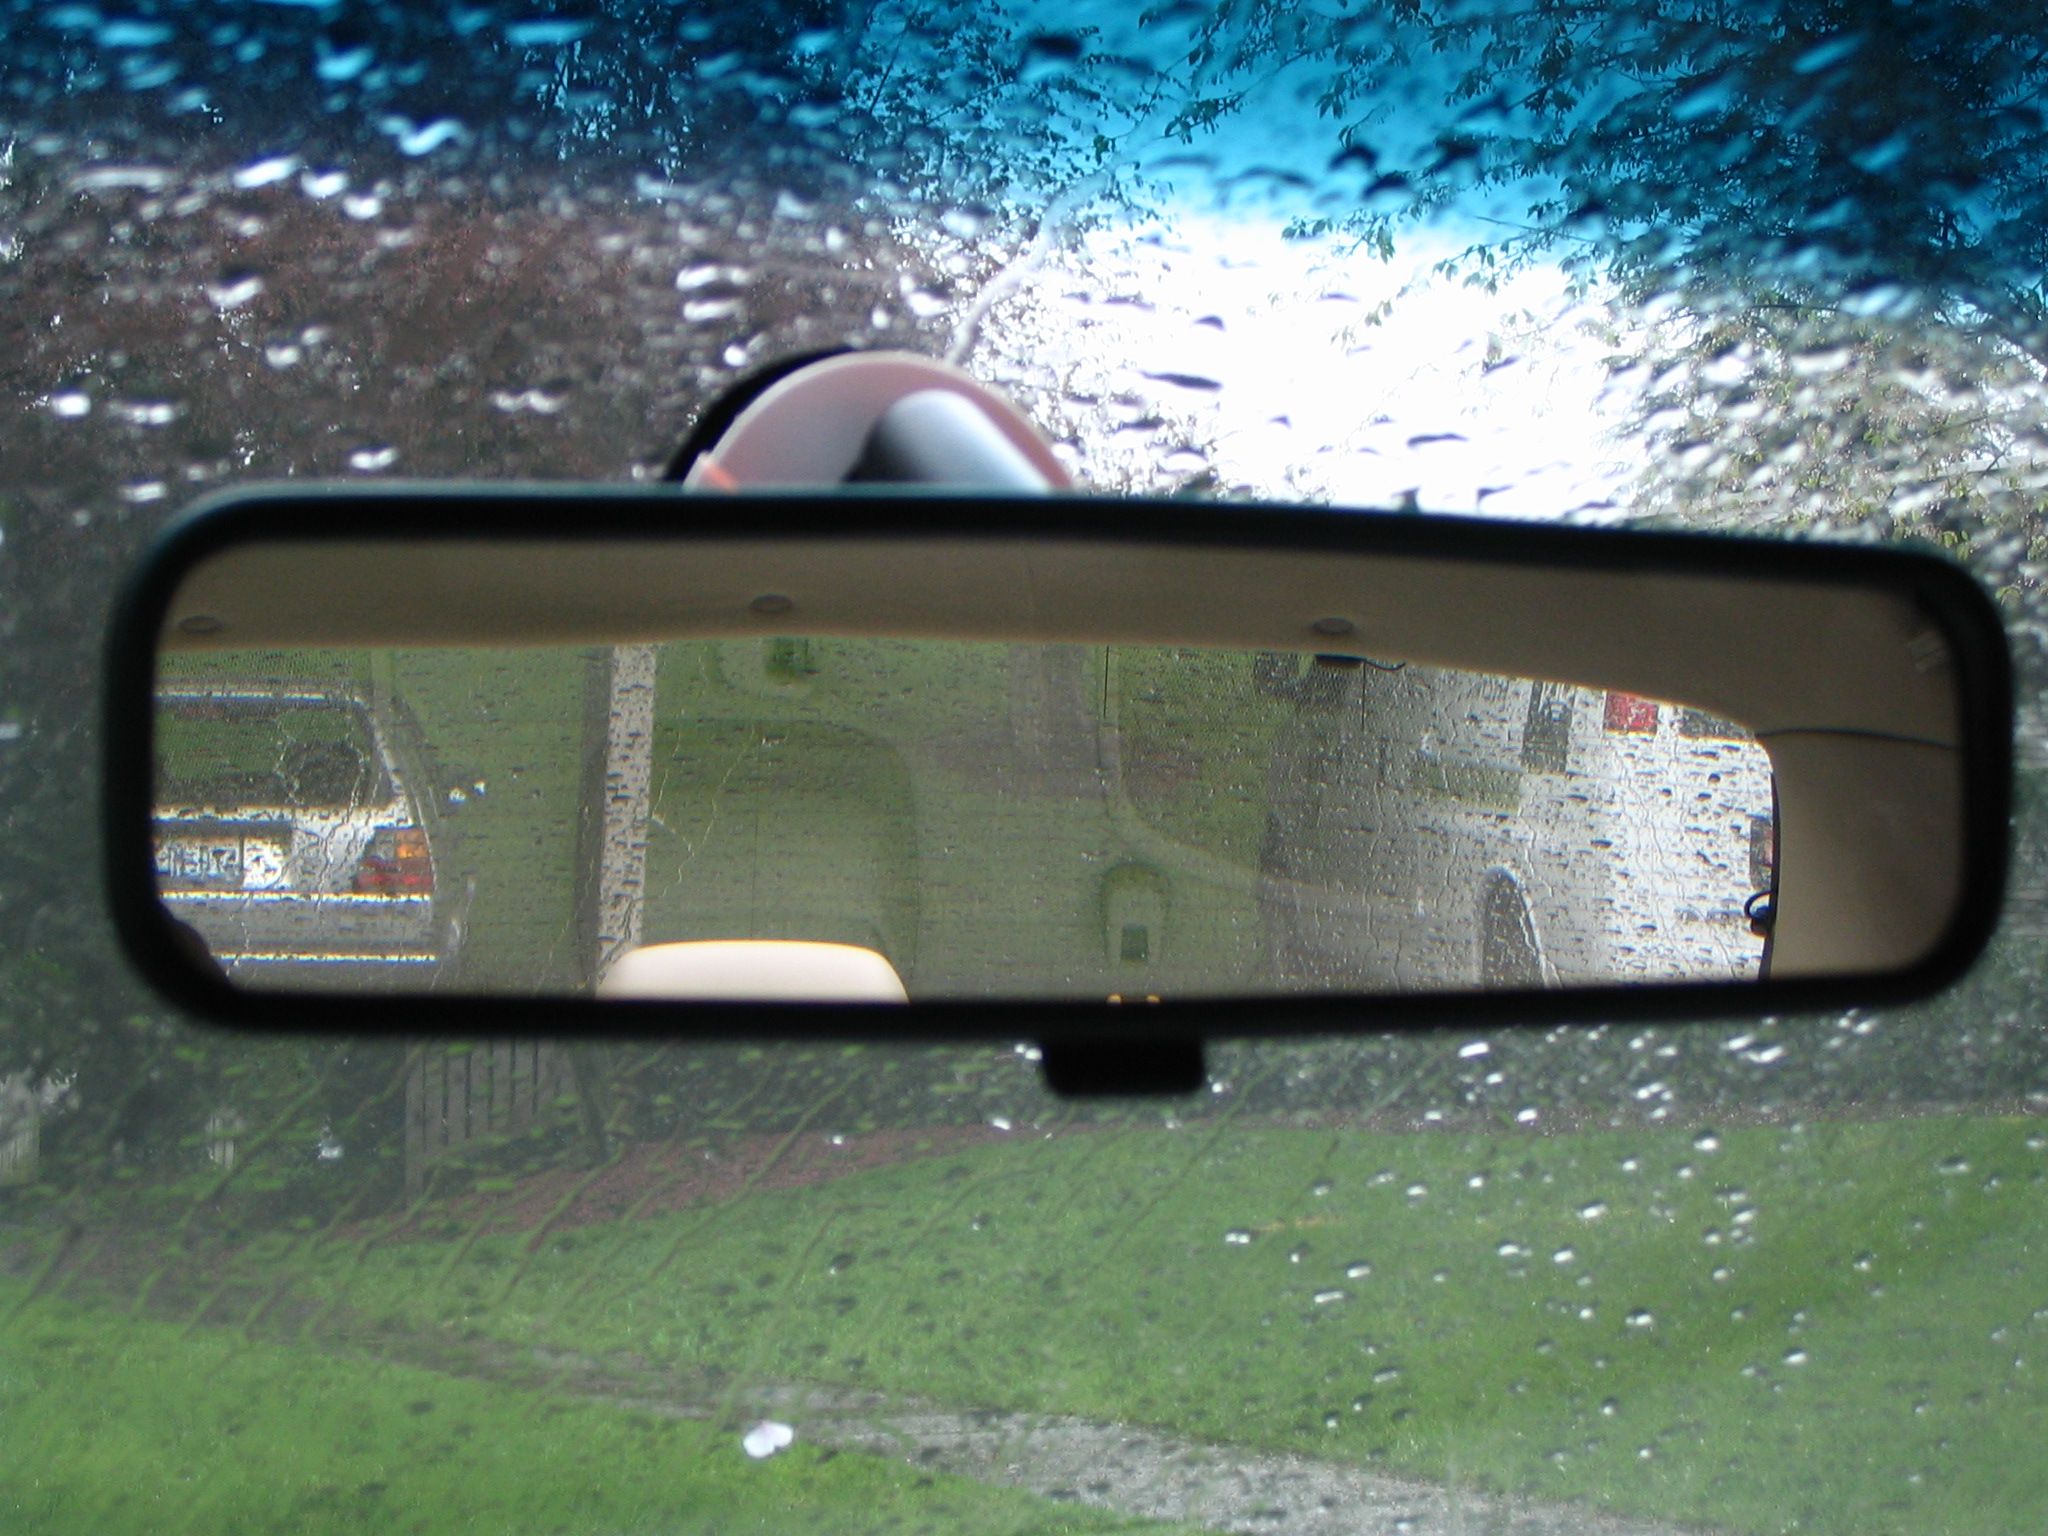 File:Rear-view mirror.jpg - Wikimedia Commons